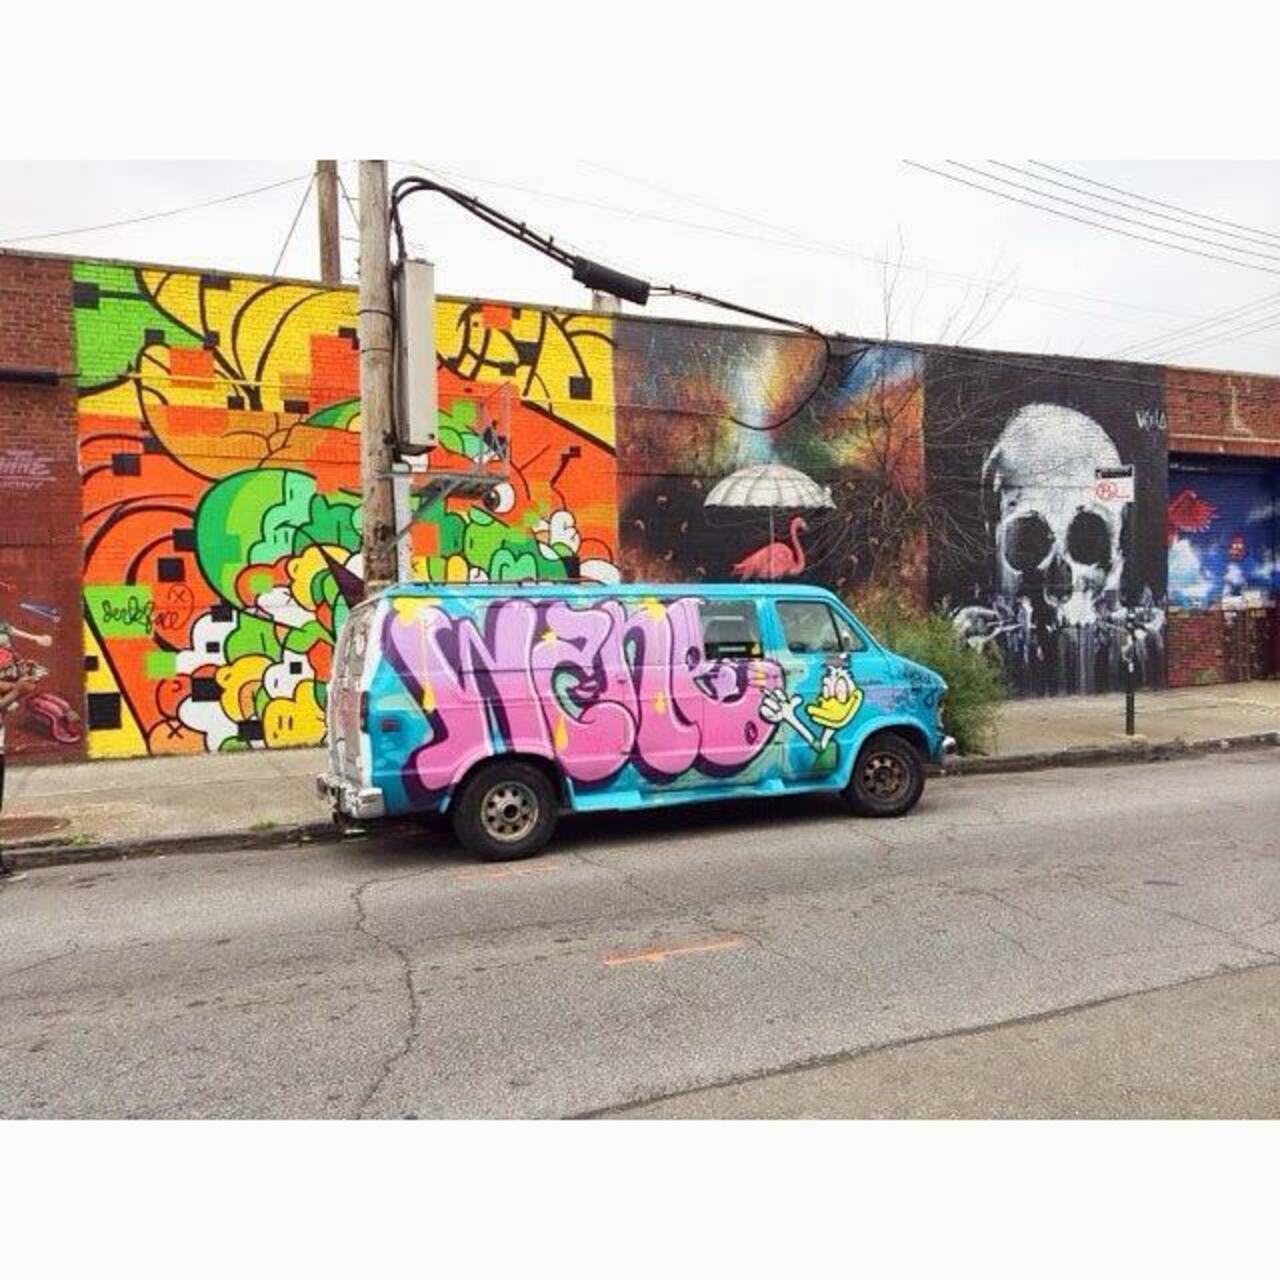 I saw this van in #brooklyn . Does anyone know of the #artist ? #streetart #graffiti http://t.co/3xFLvXtK15